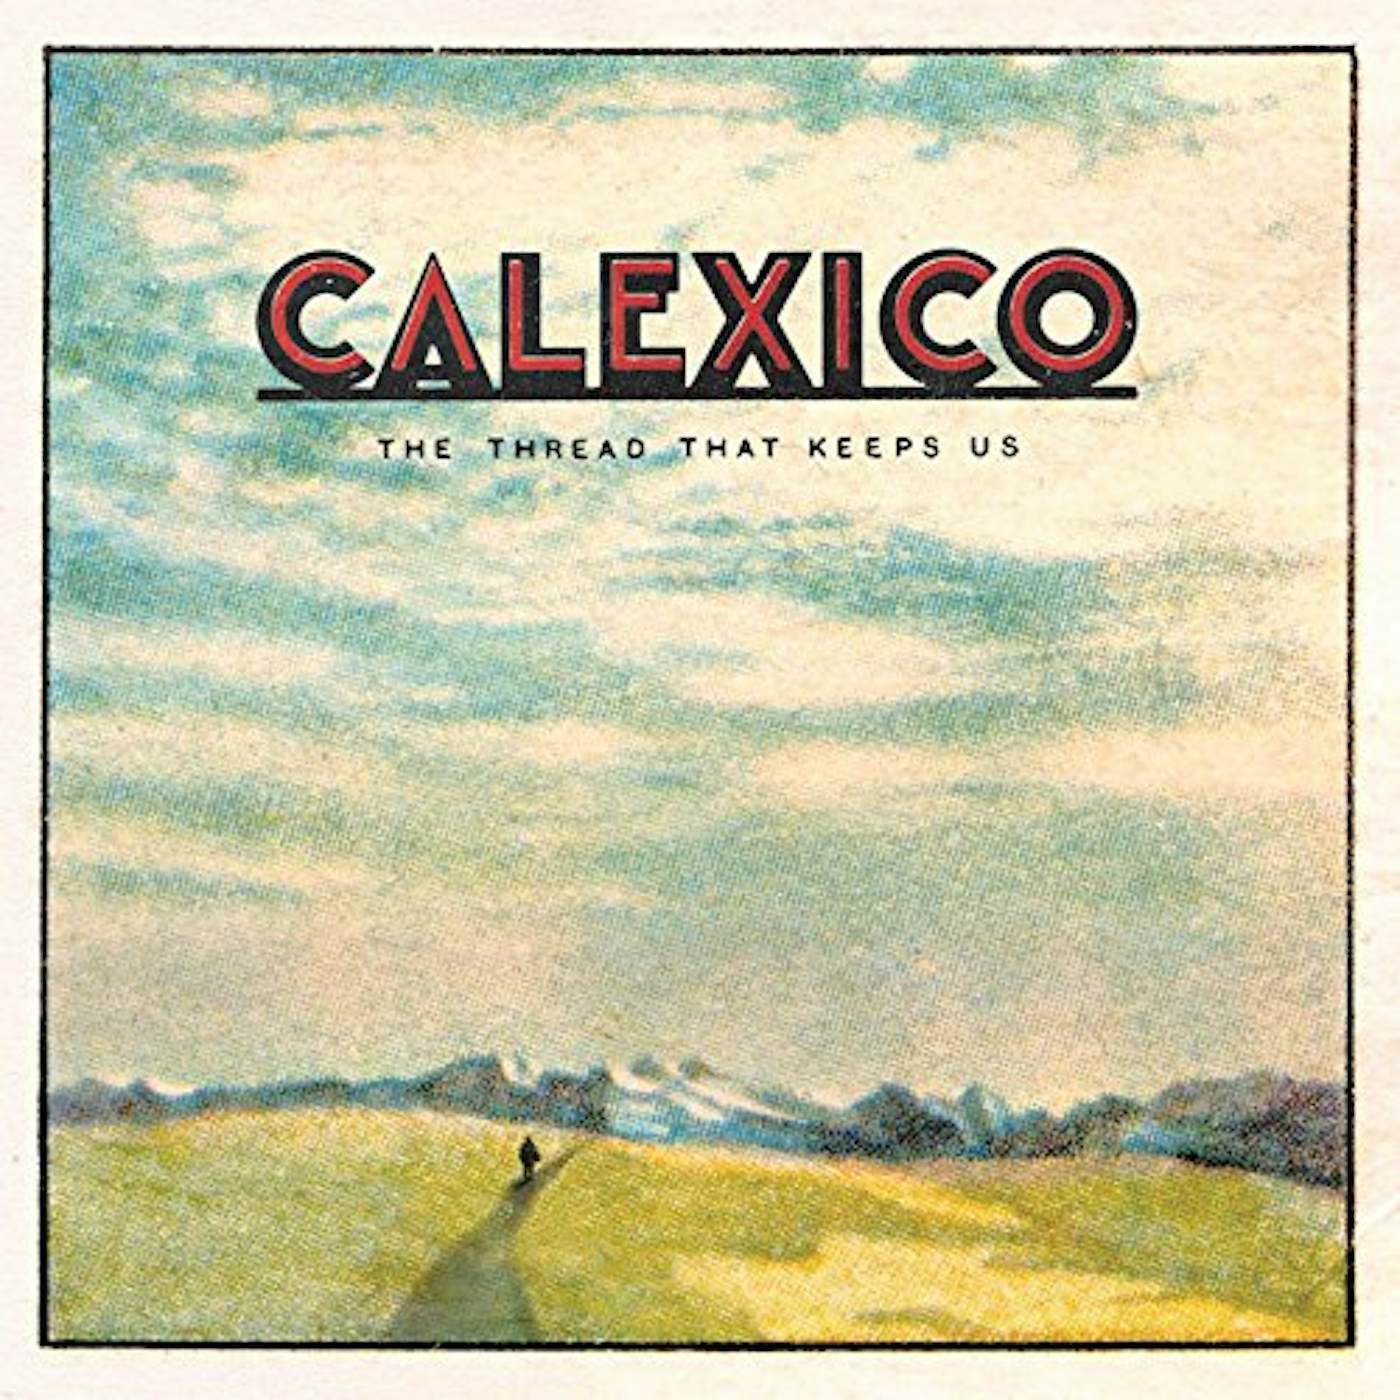 Calexico THREAD THAT KEEPS US Vinyl Record